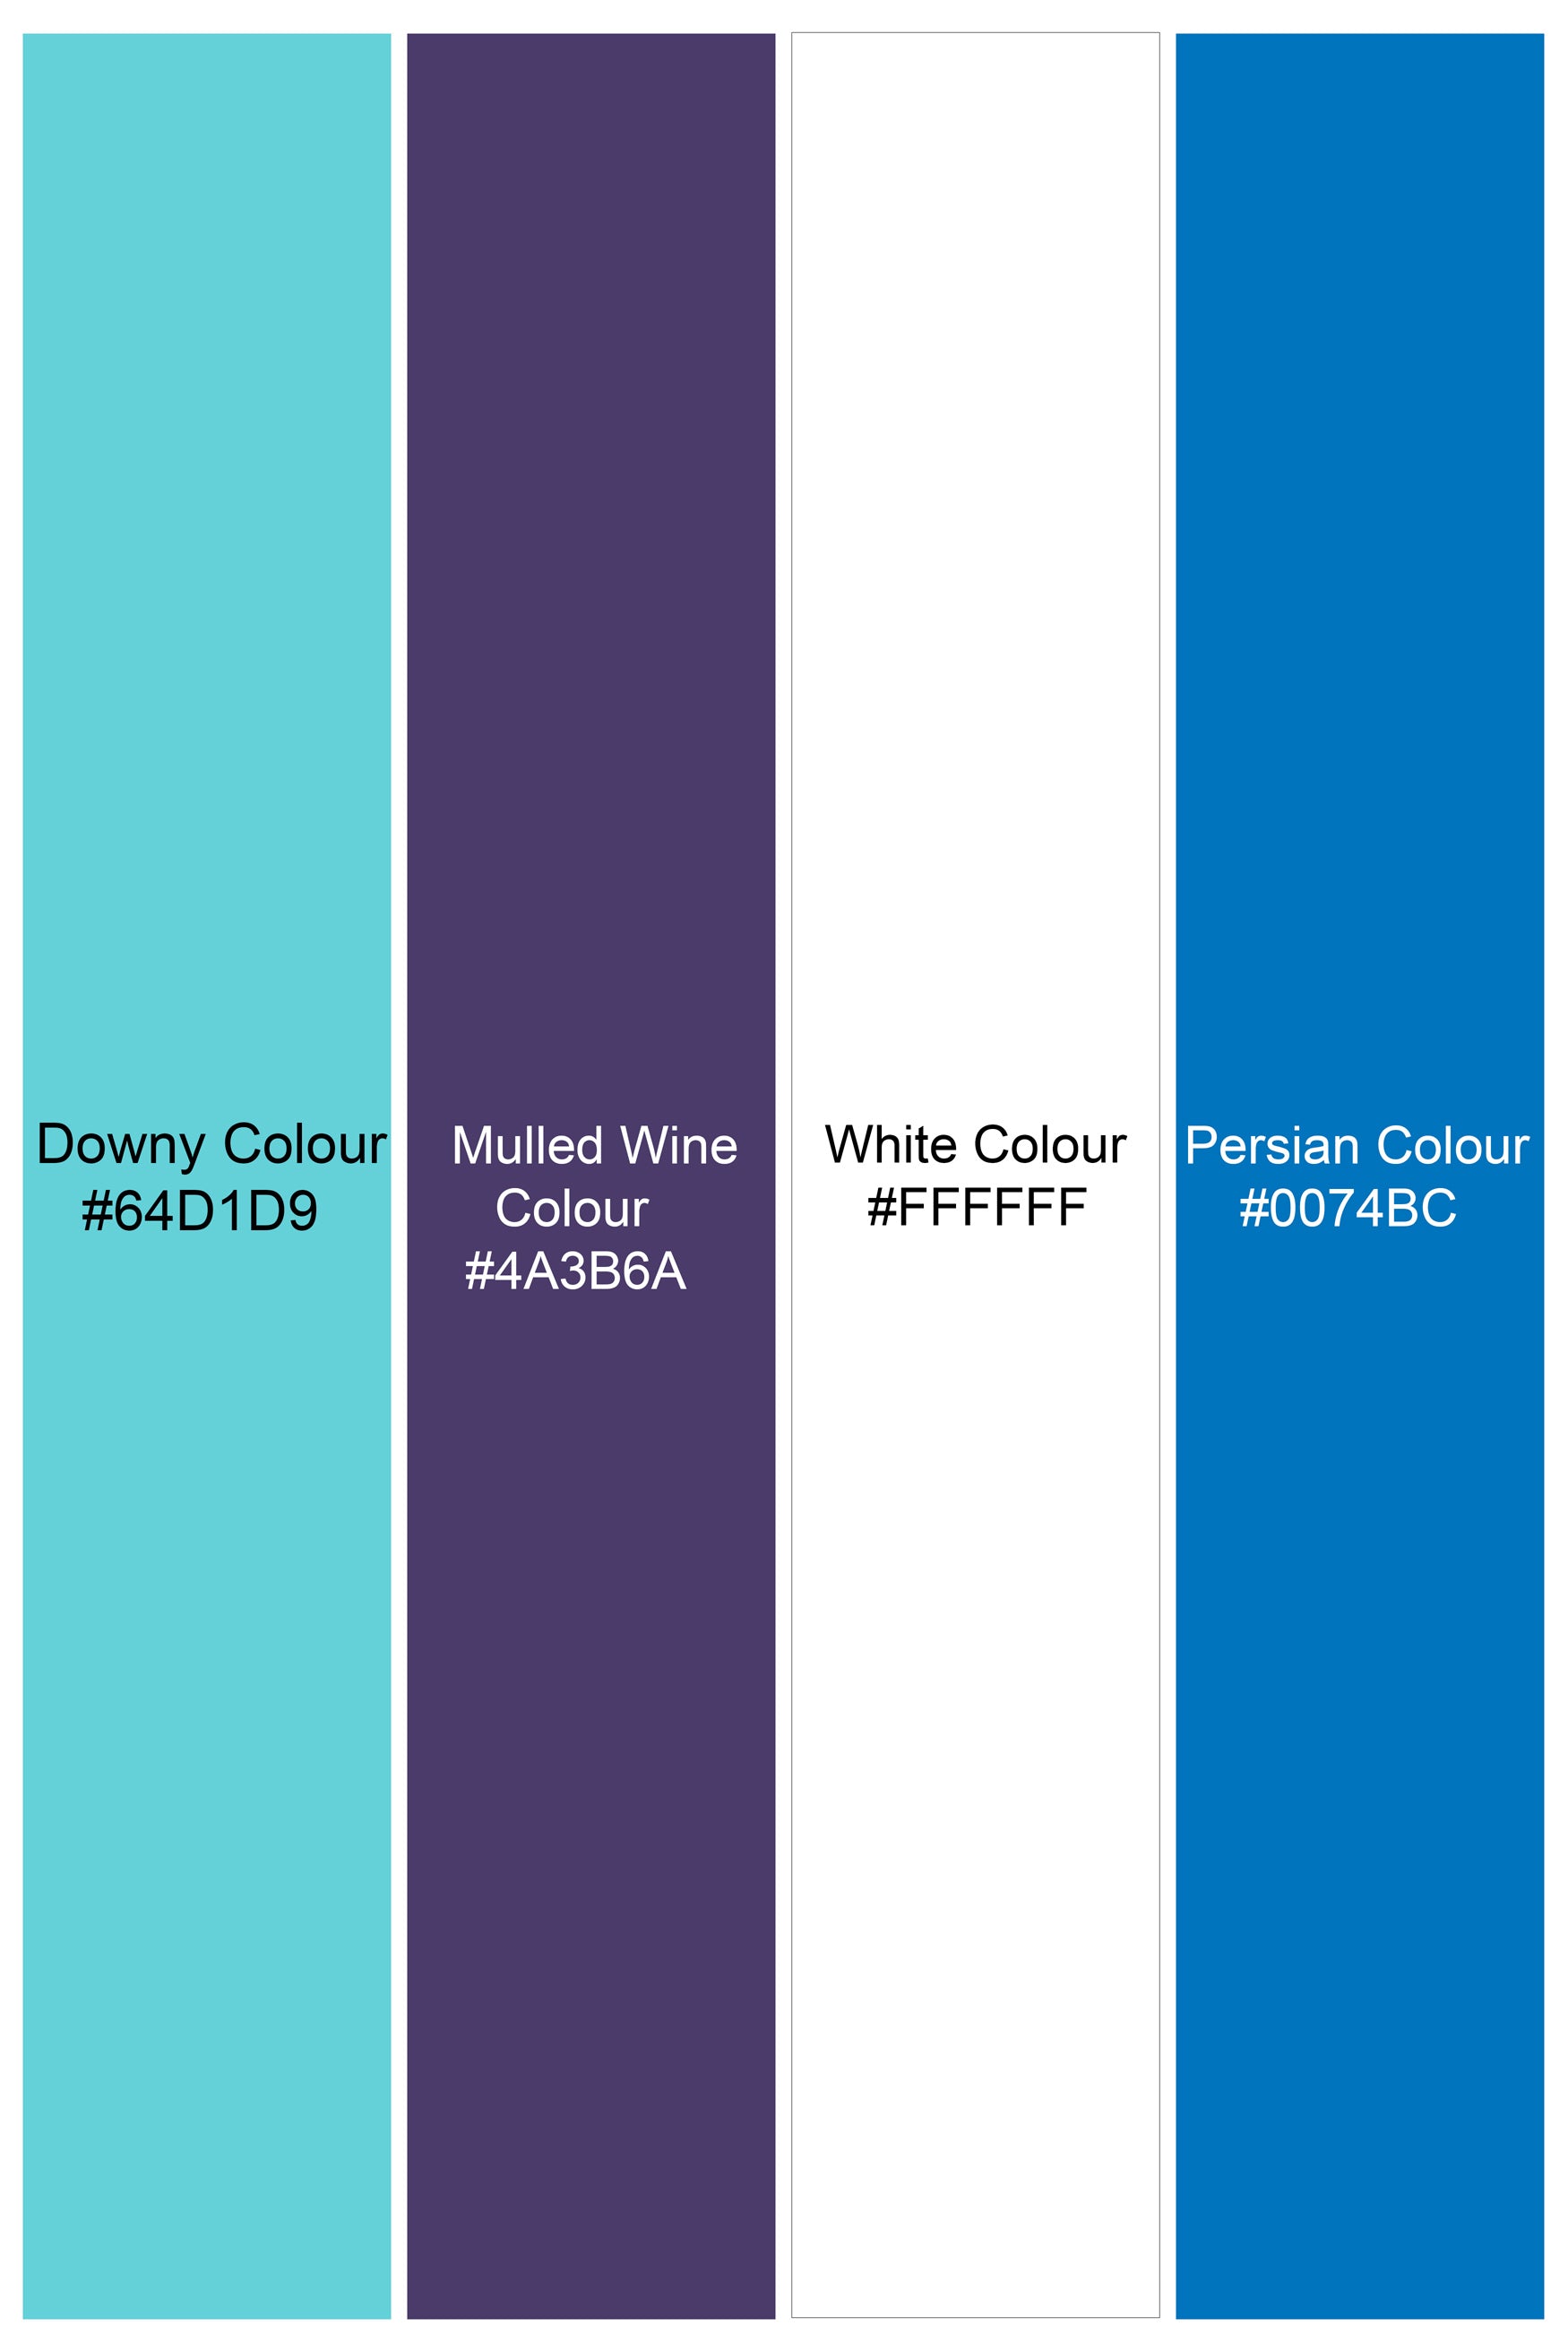 Downy Blue and Mulled Wine Purple Multicolour Tile Printed Subtle Sheen Super Soft Premium Cotton Shirt 11700-38, 11700-H-38, 11700-39, 11700-H-39, 11700-40, 11700-H-40, 11700-42, 11700-H-42, 11700-44, 11700-H-44, 11700-46, 11700-H-46, 11700-48, 11700-H-48, 11700-50, 11700-H-50, 11700-52, 11700-H-52